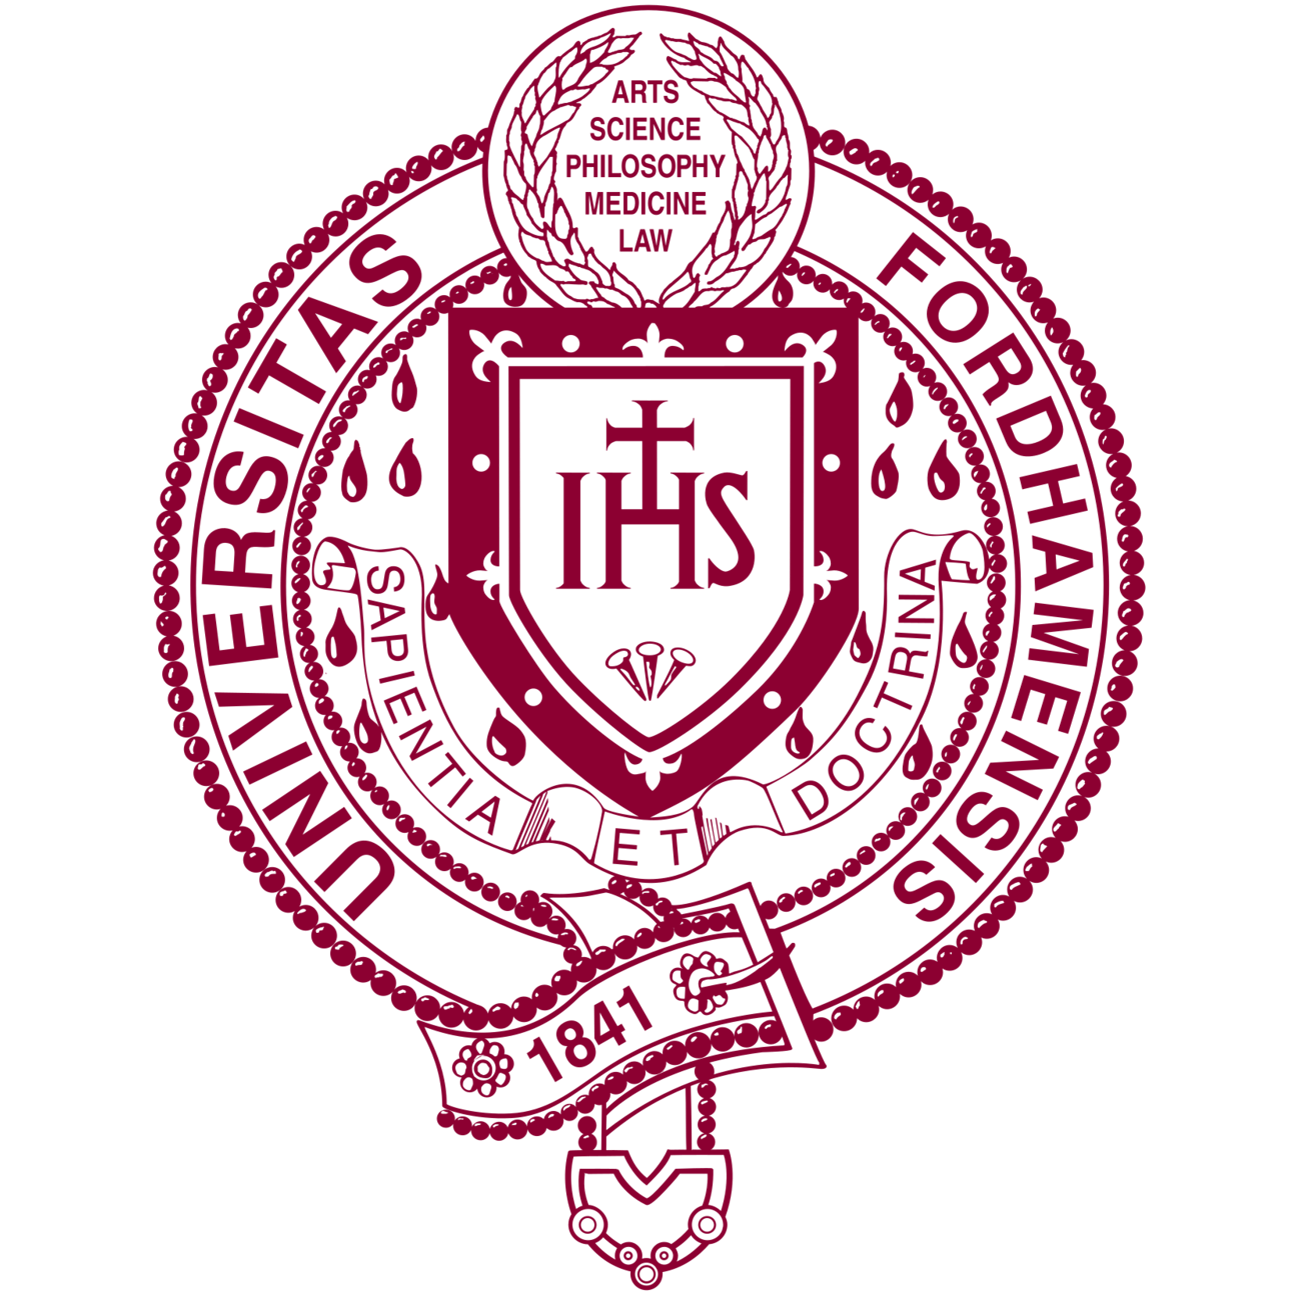 Fordham university seal